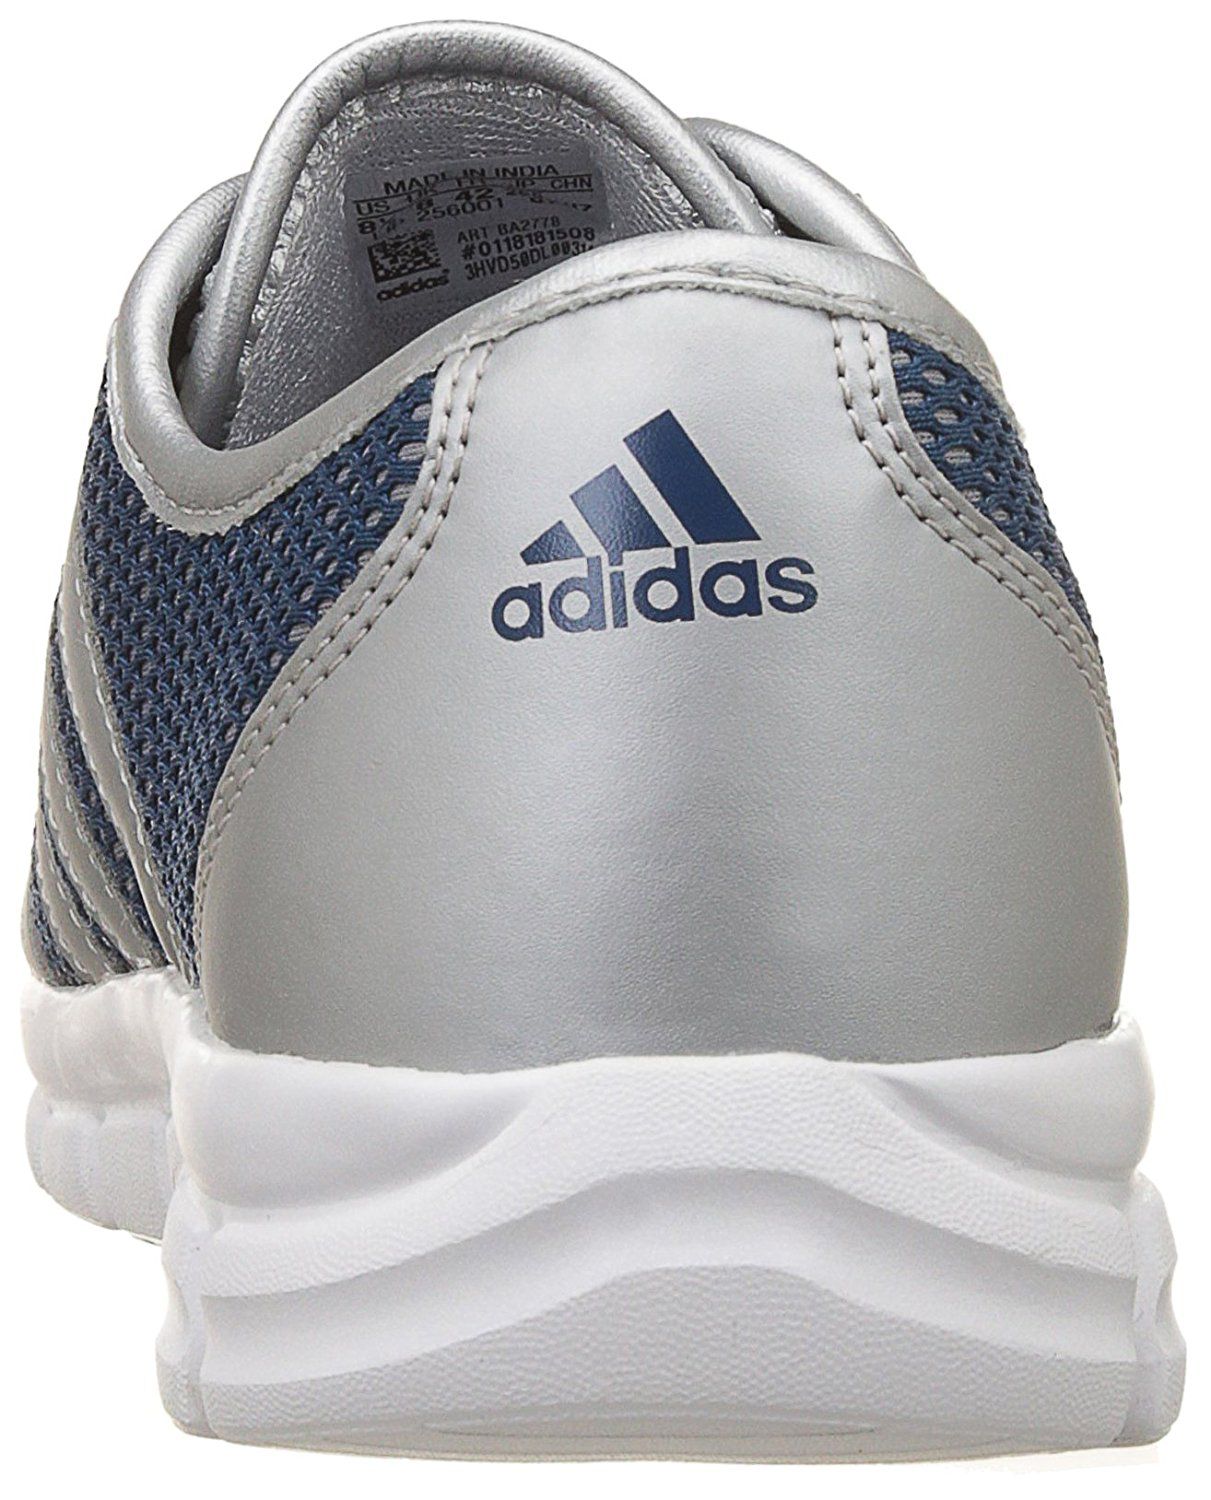 adidas marlin 6.0 running shoes